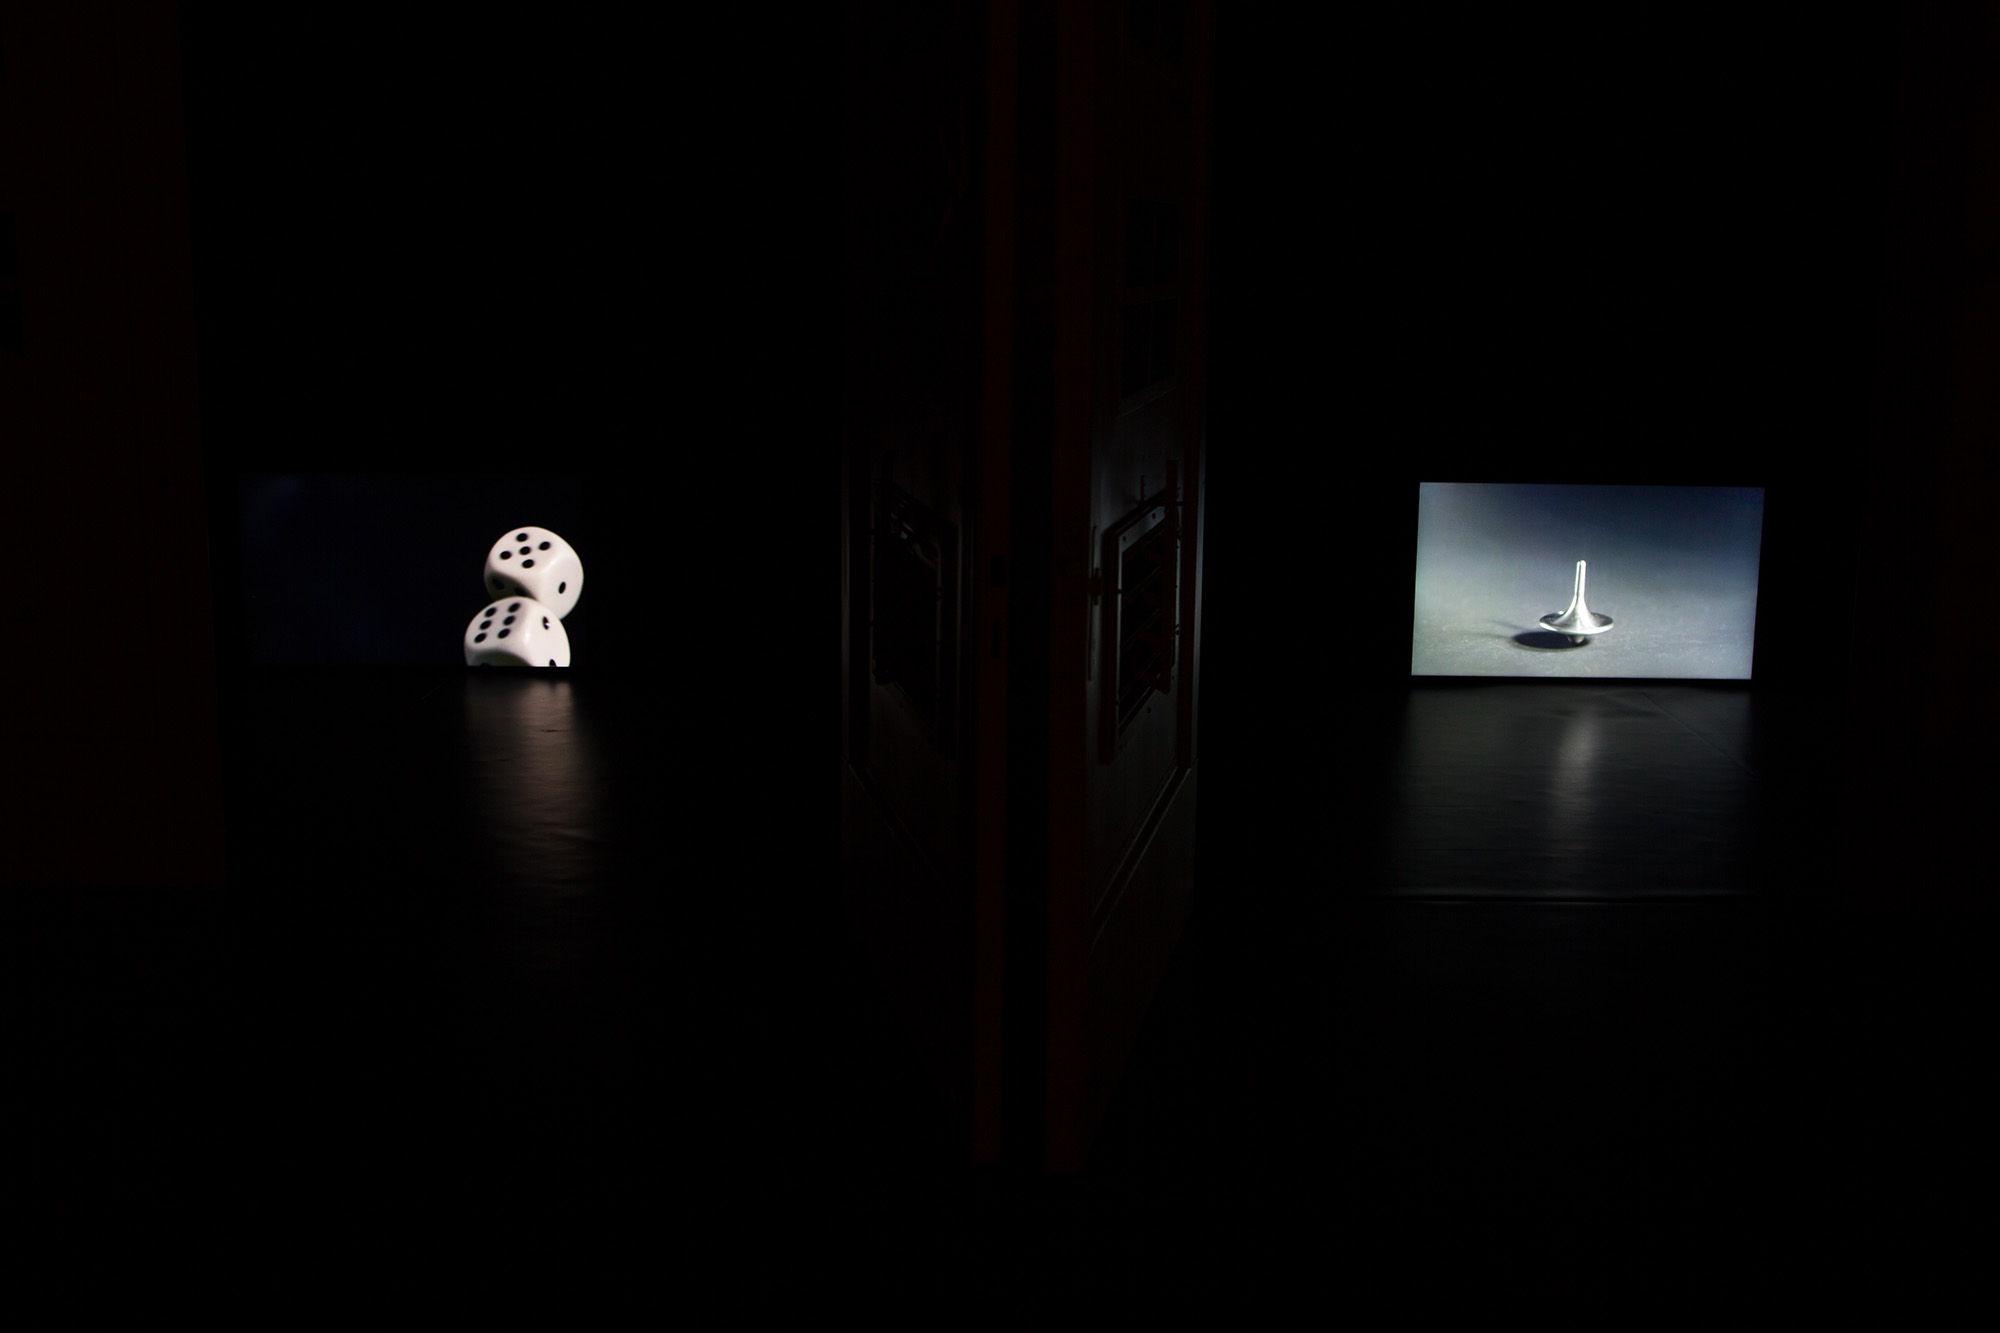 Alicja Kwade, In Ewig den Zufall Betrachtend, 2014; Kreisel (Inception), 2012, fot. Roman März